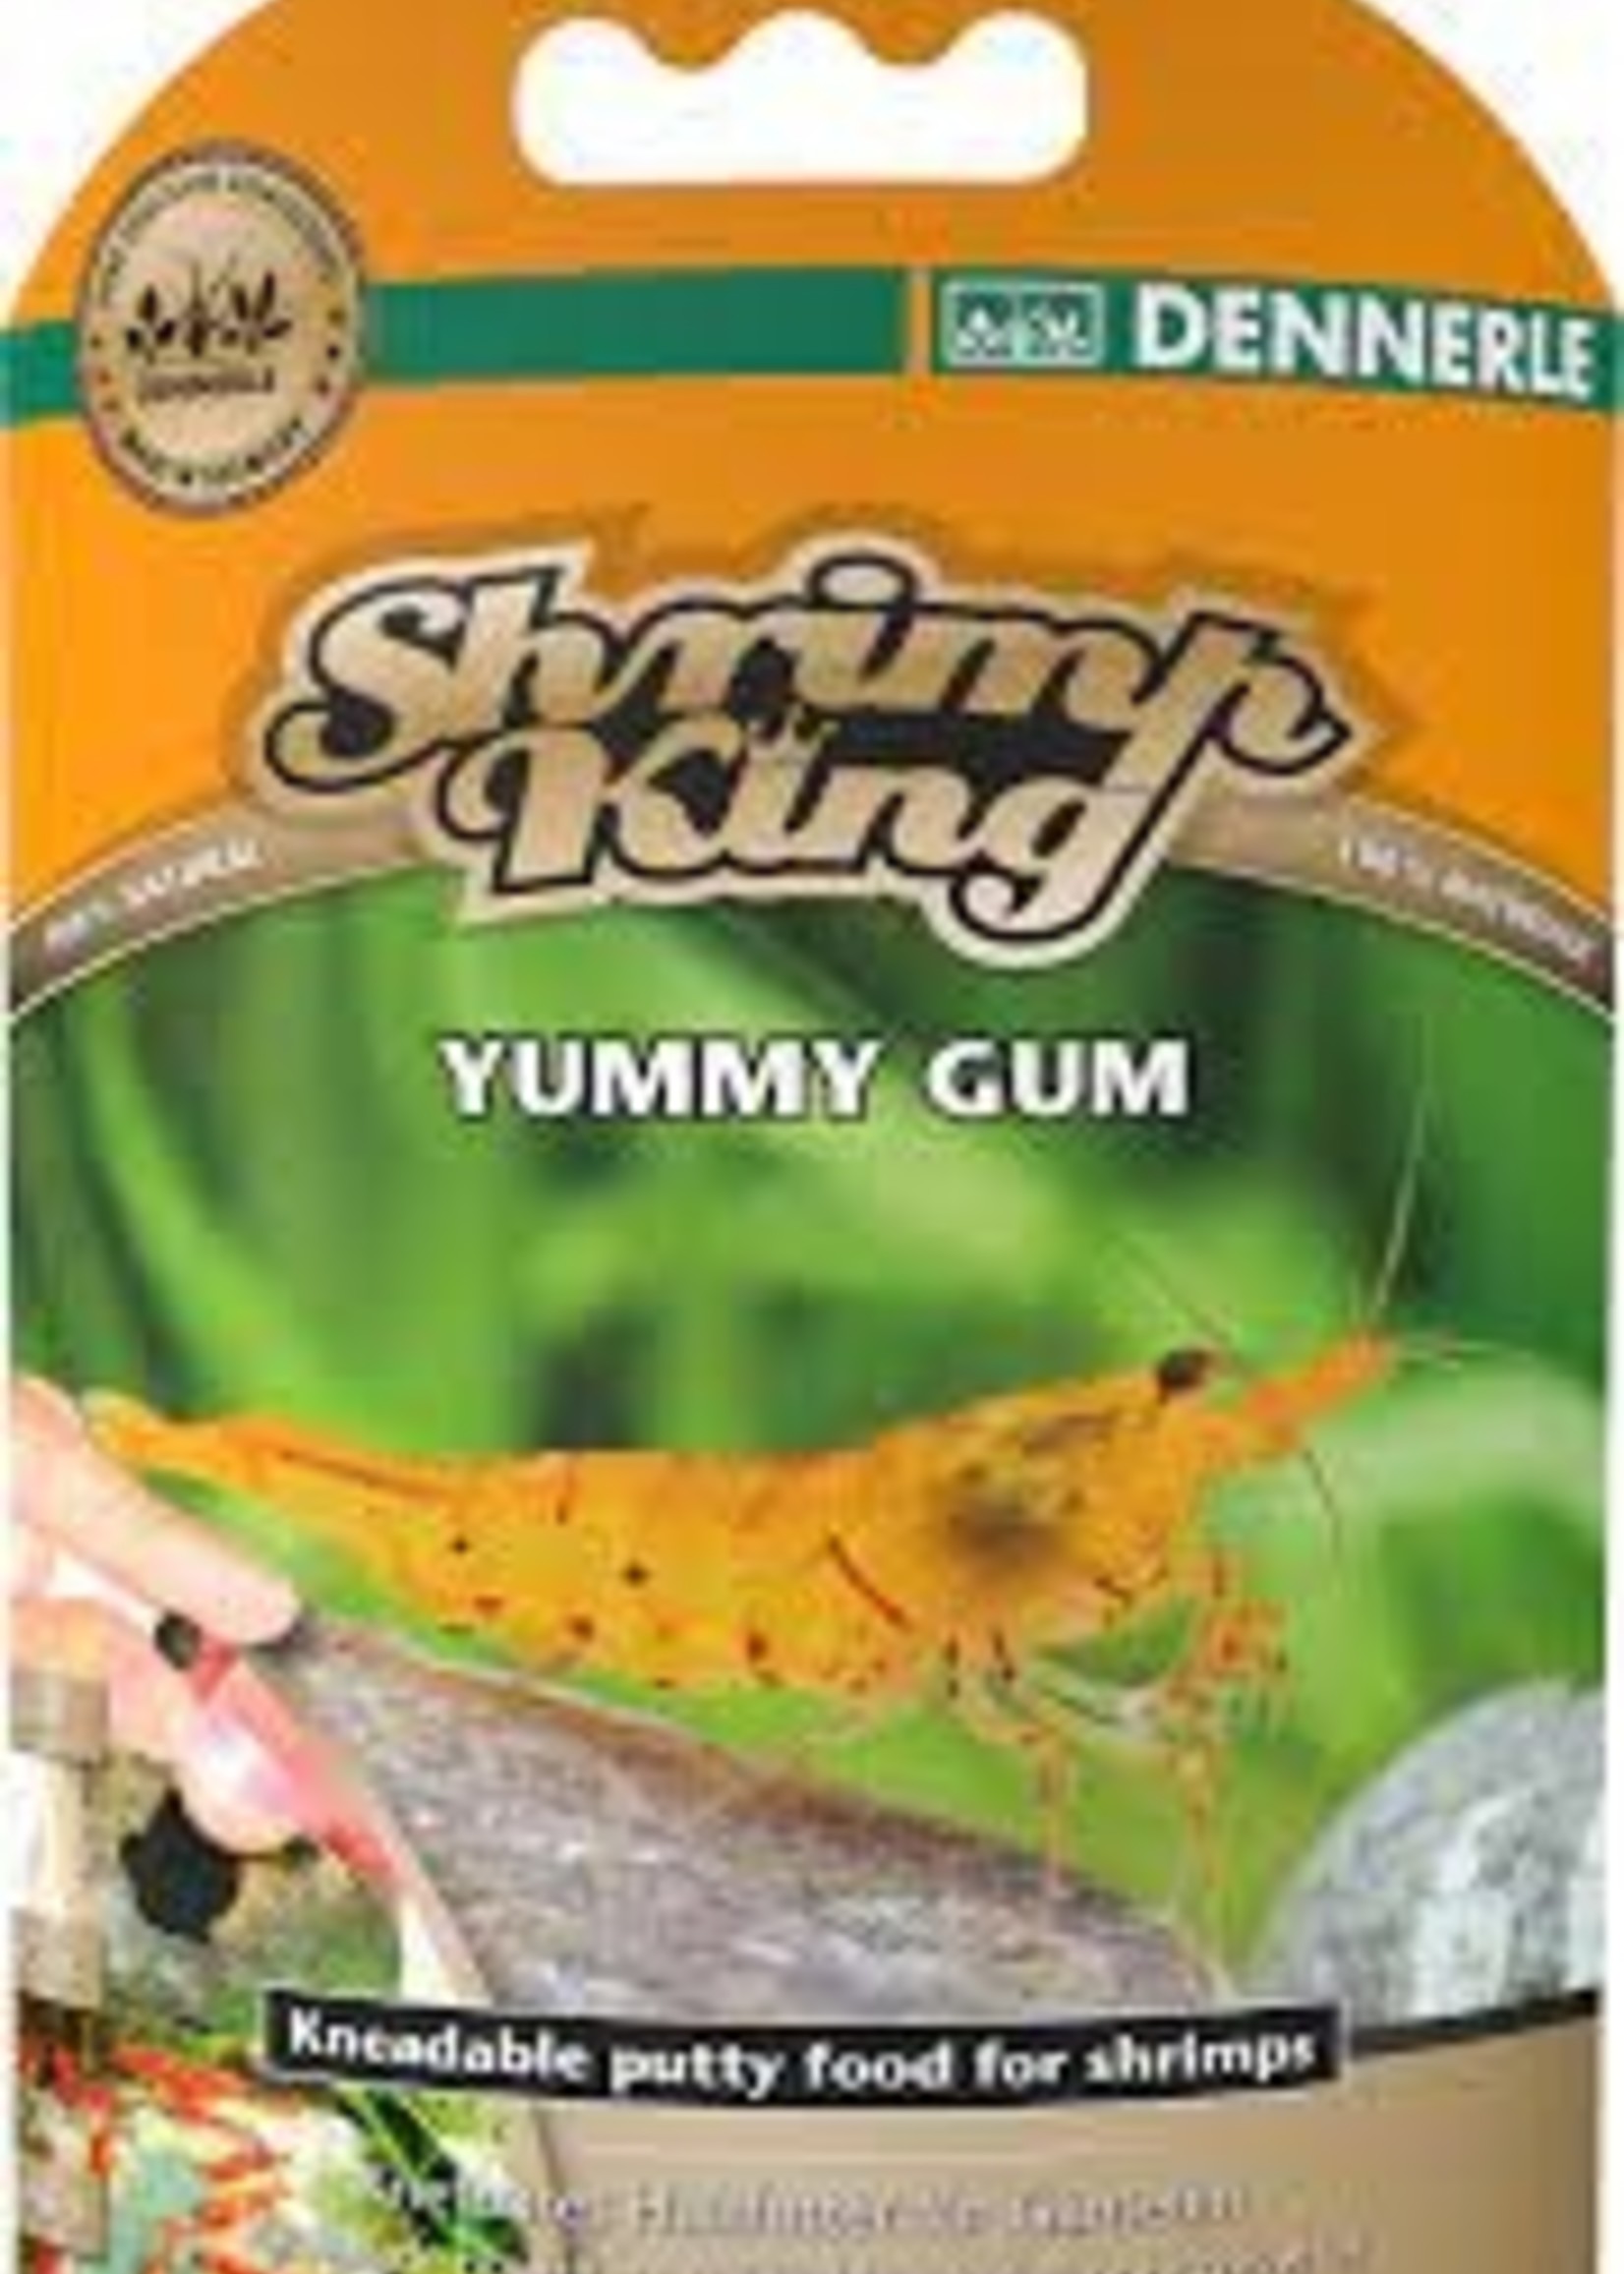 JBJ Dennerle Shrimp King Yummy Gum